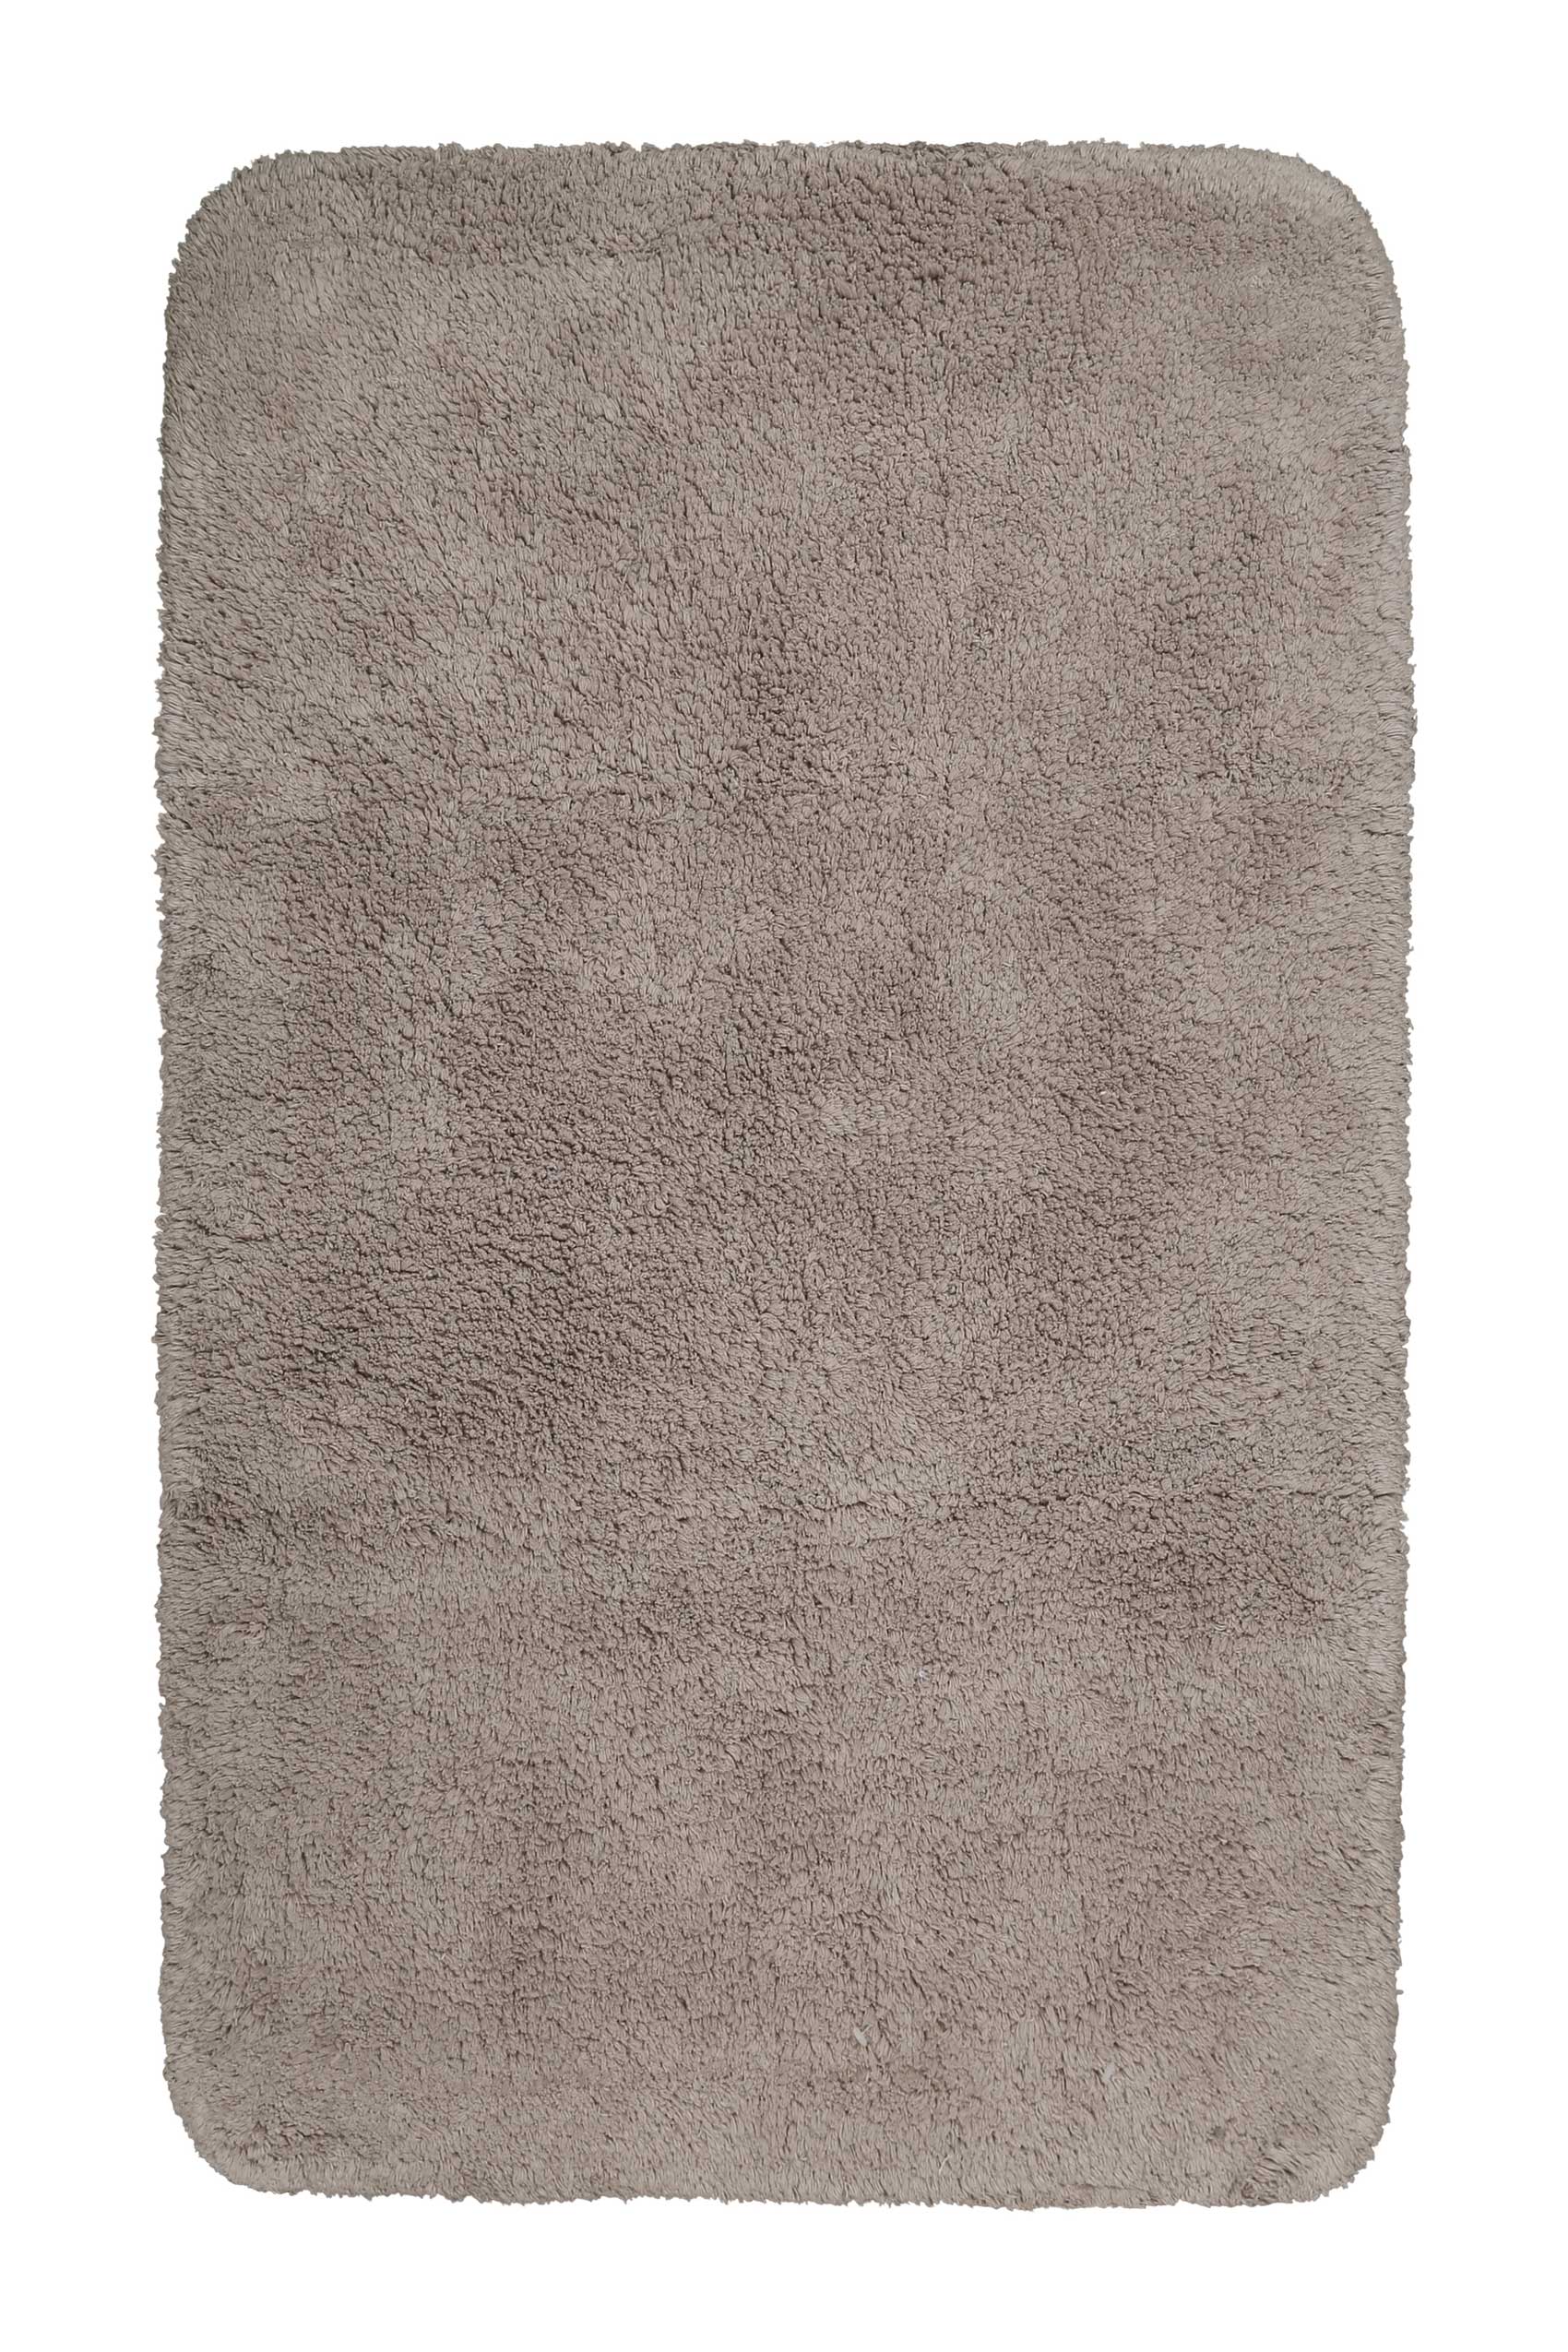 tapis de bain doux marron taupe coton 80x150